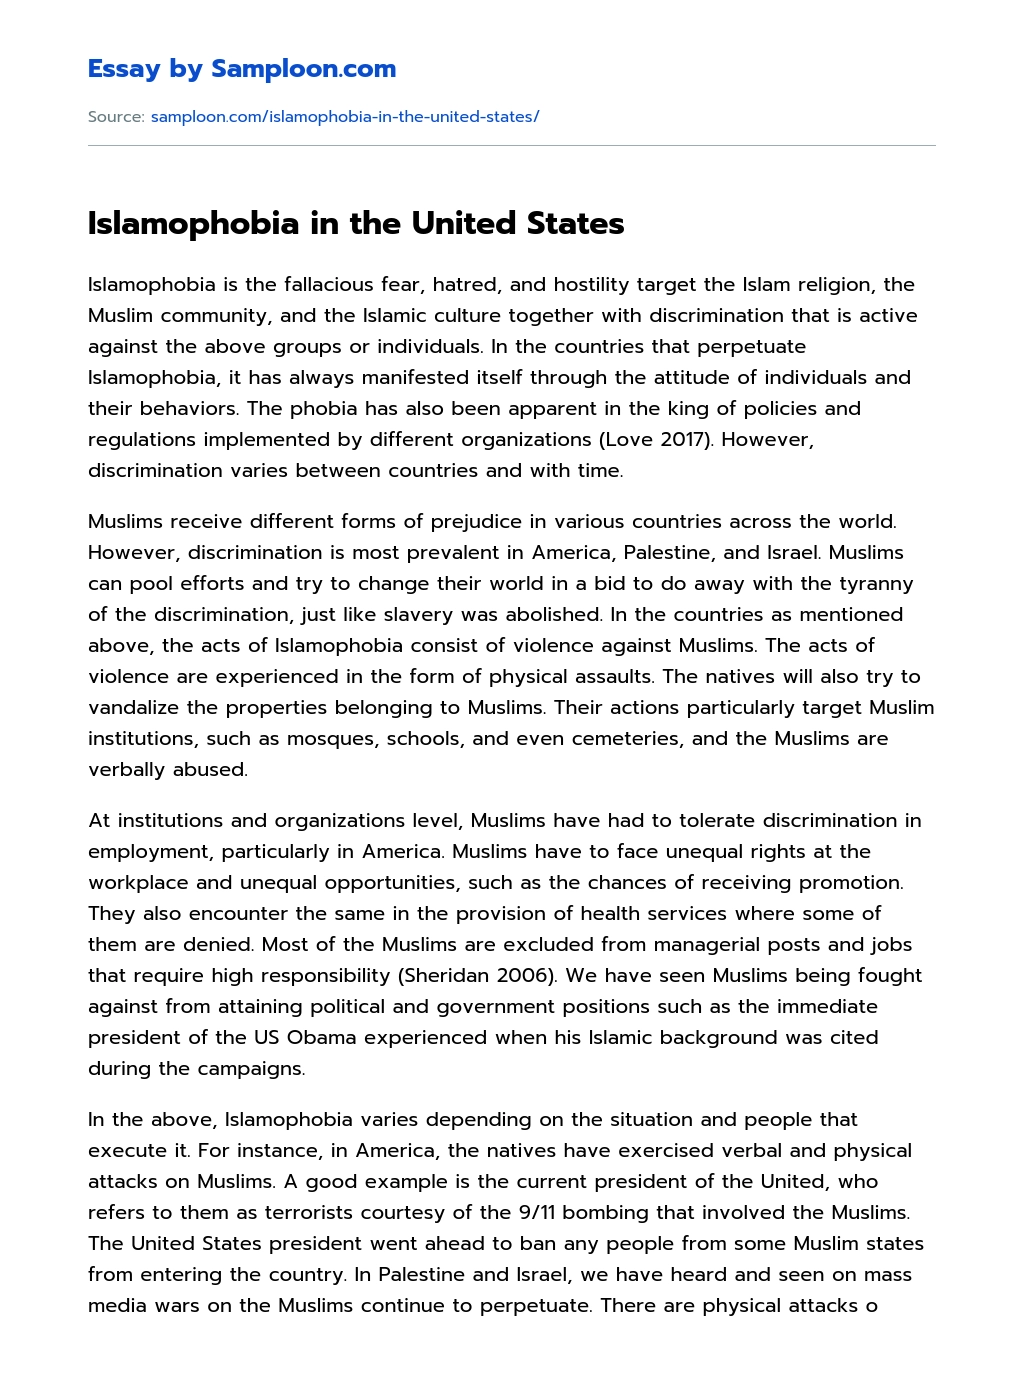 Islamophobia in the United States essay